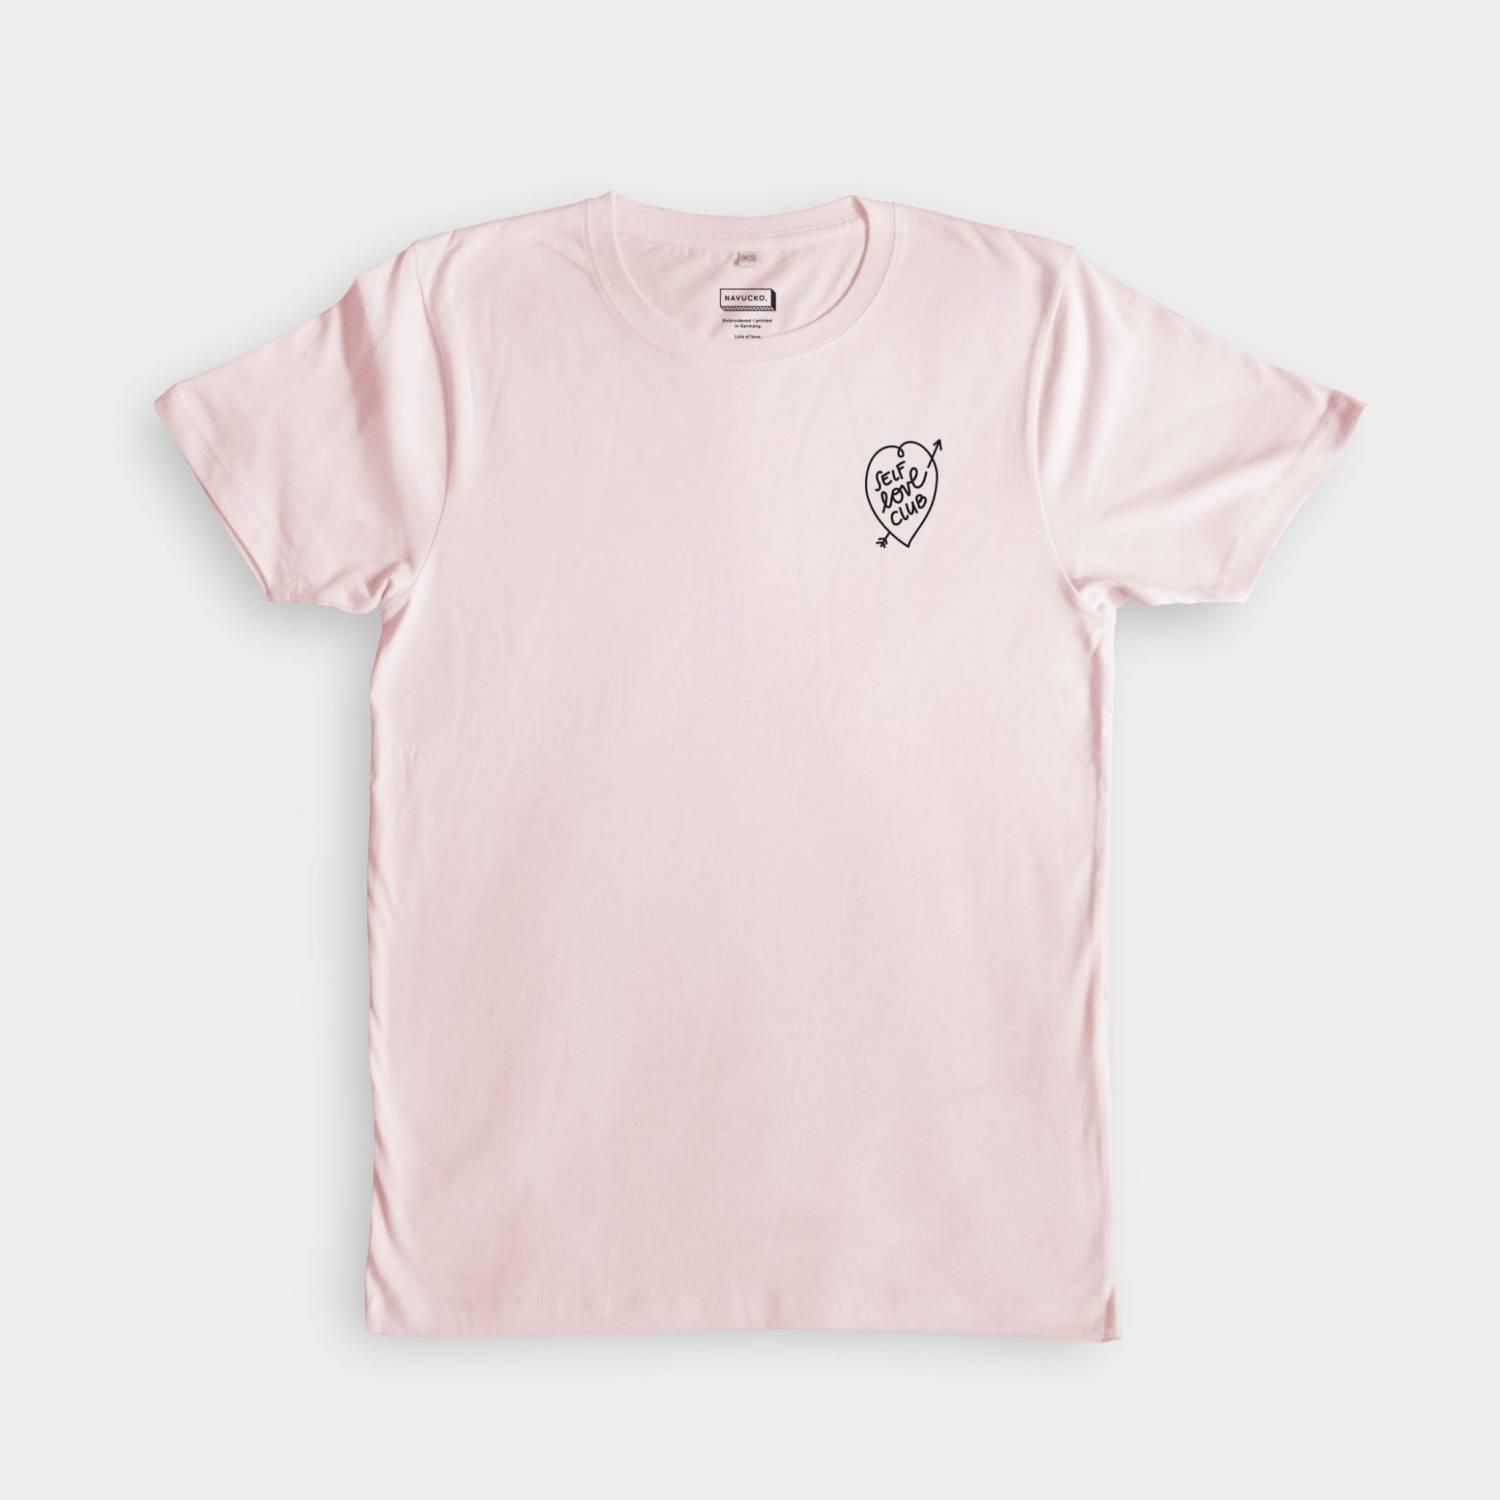 Navucko Rosa T-Shirt Self Love Club mit schwarzem Motiv